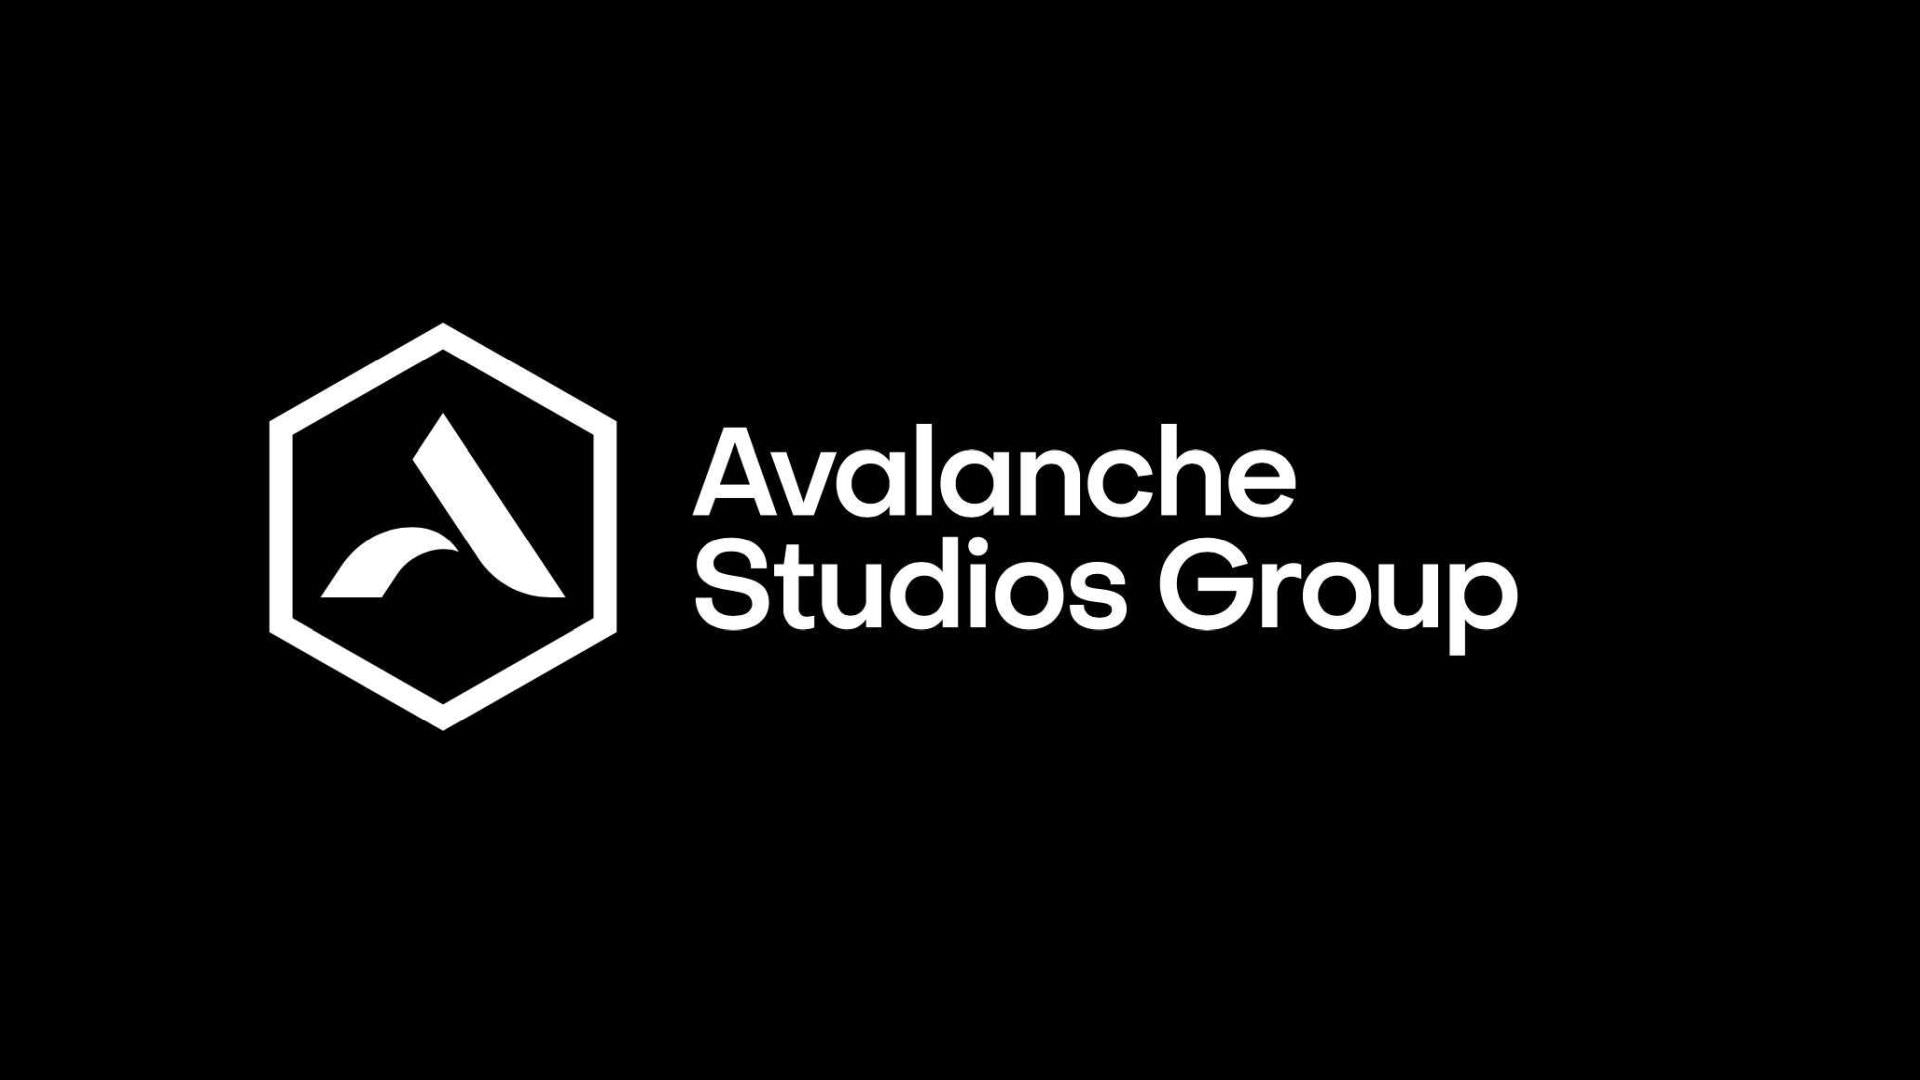 avalanche studios logo  Image of avalanche studios logo